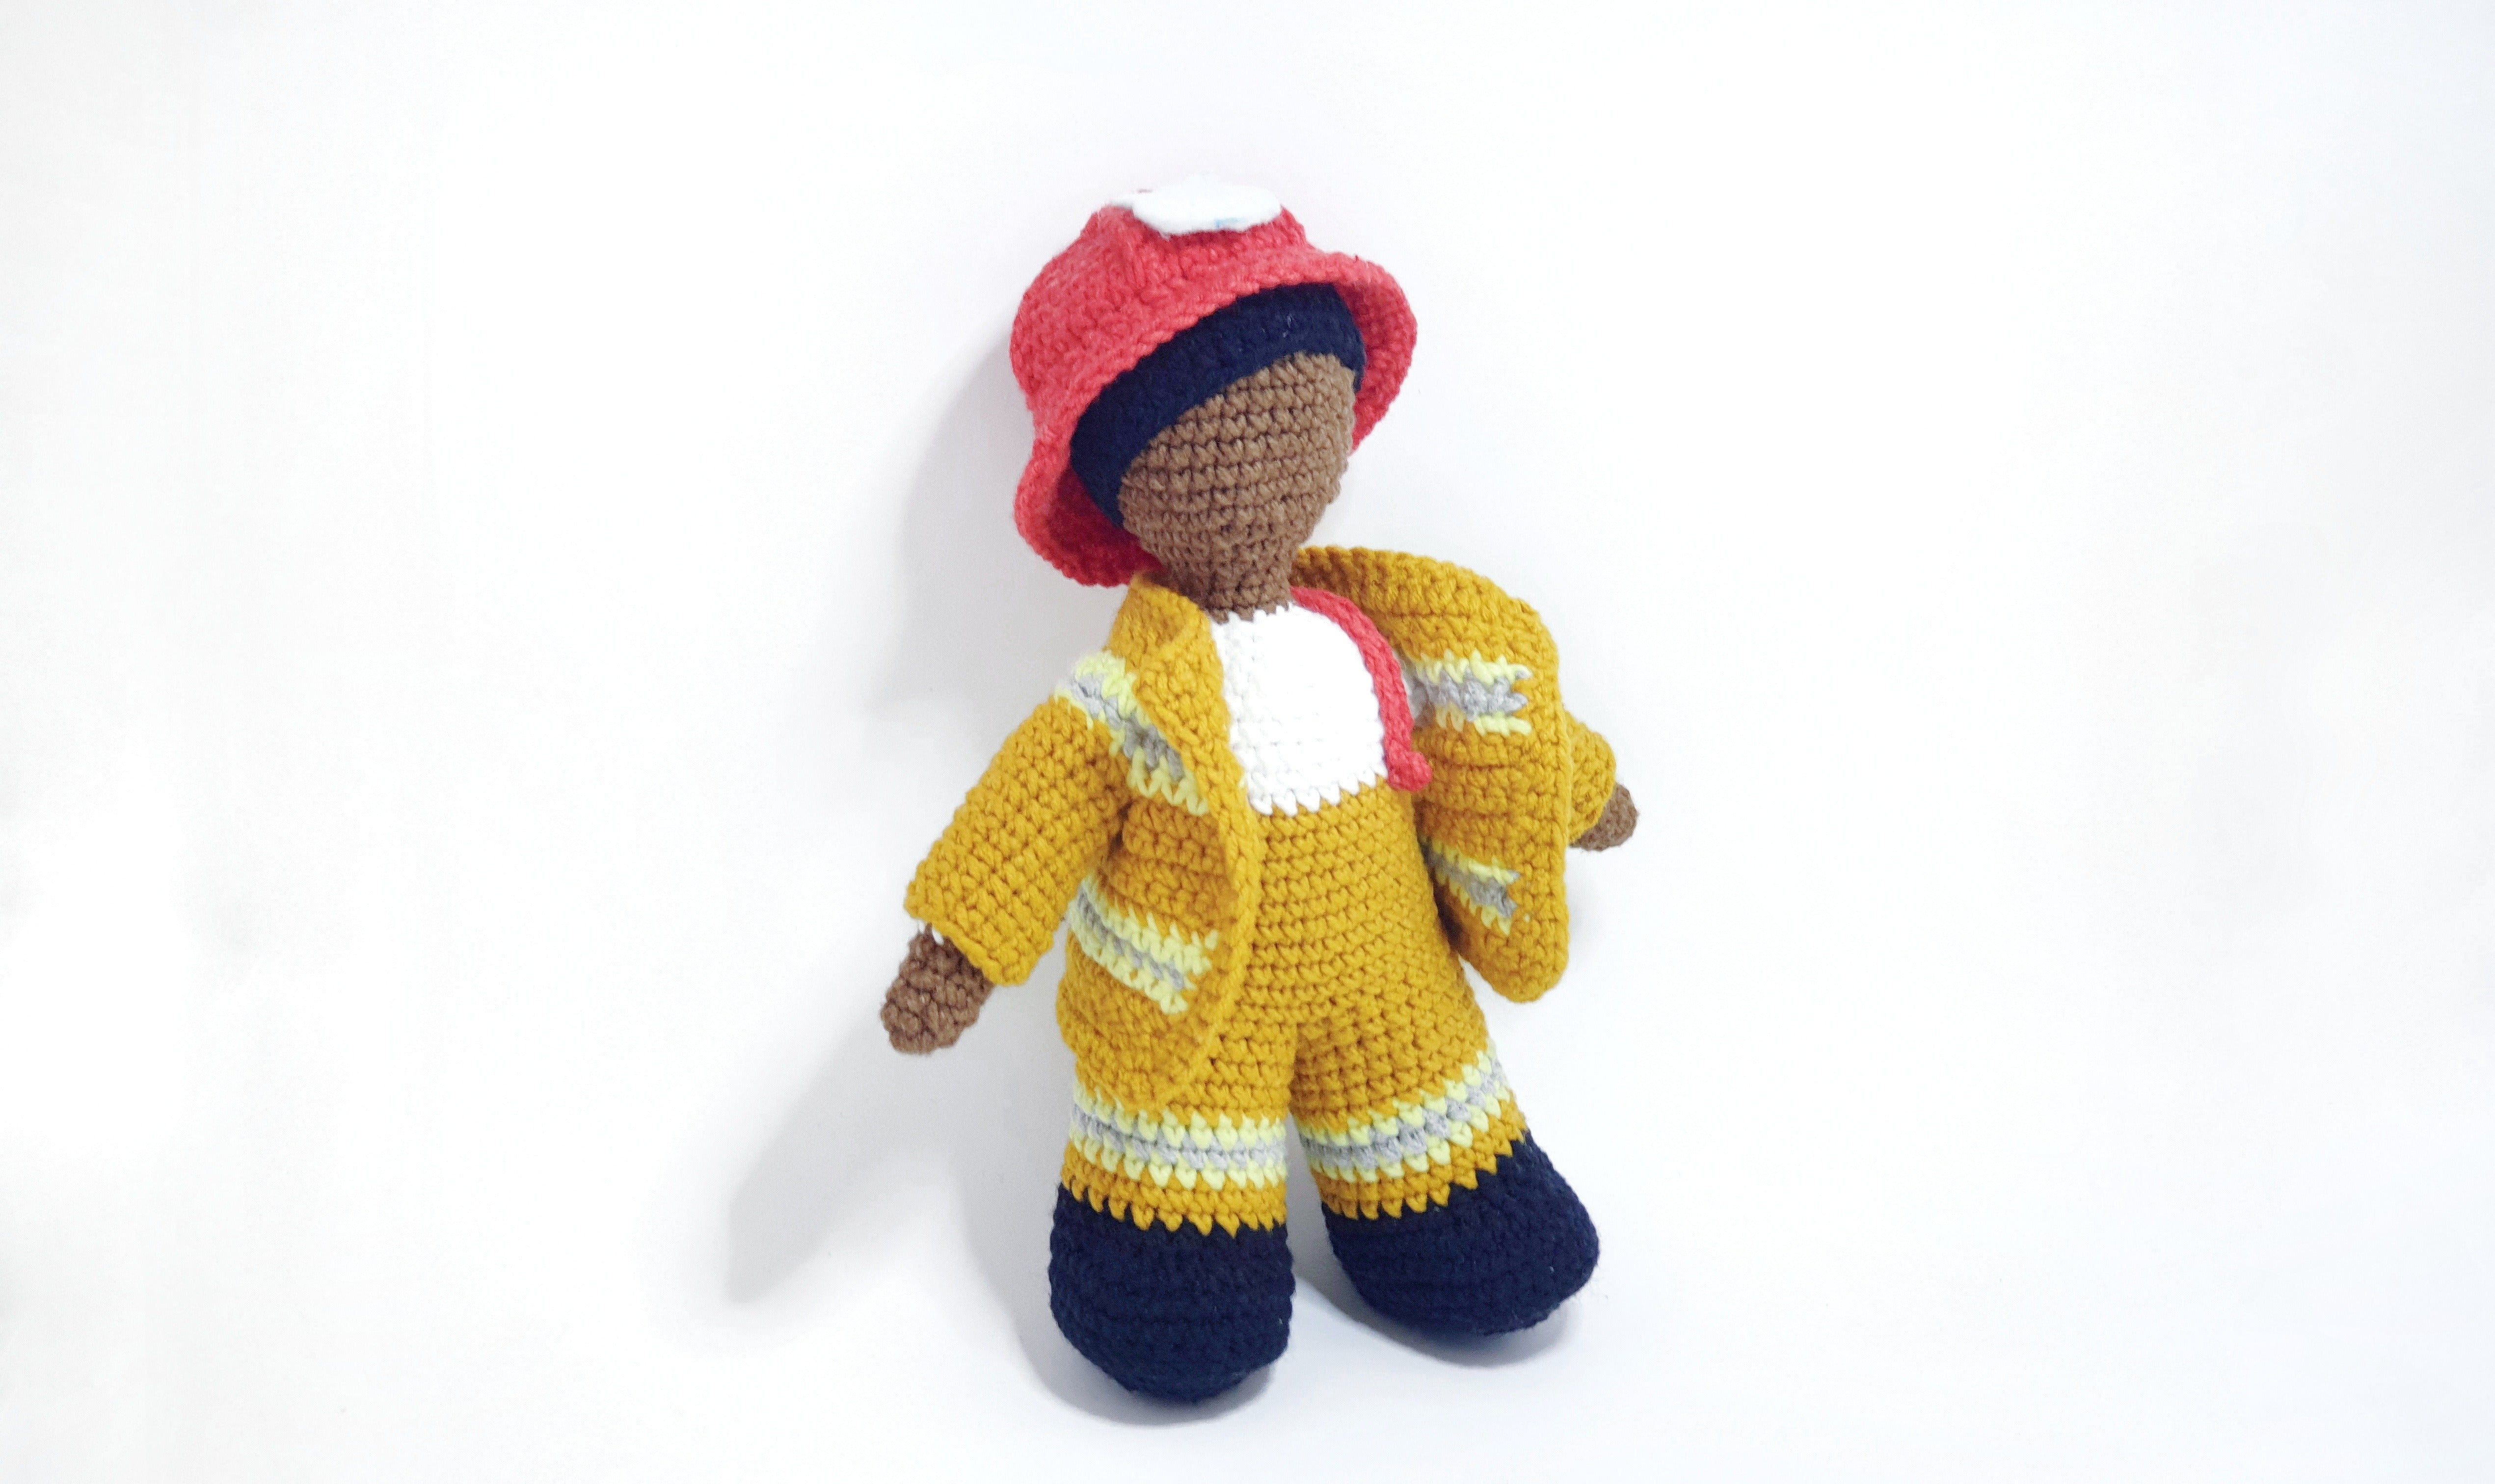 Crochet patterns amigurumi Firefighter doll PDF / Instant Download tutorial